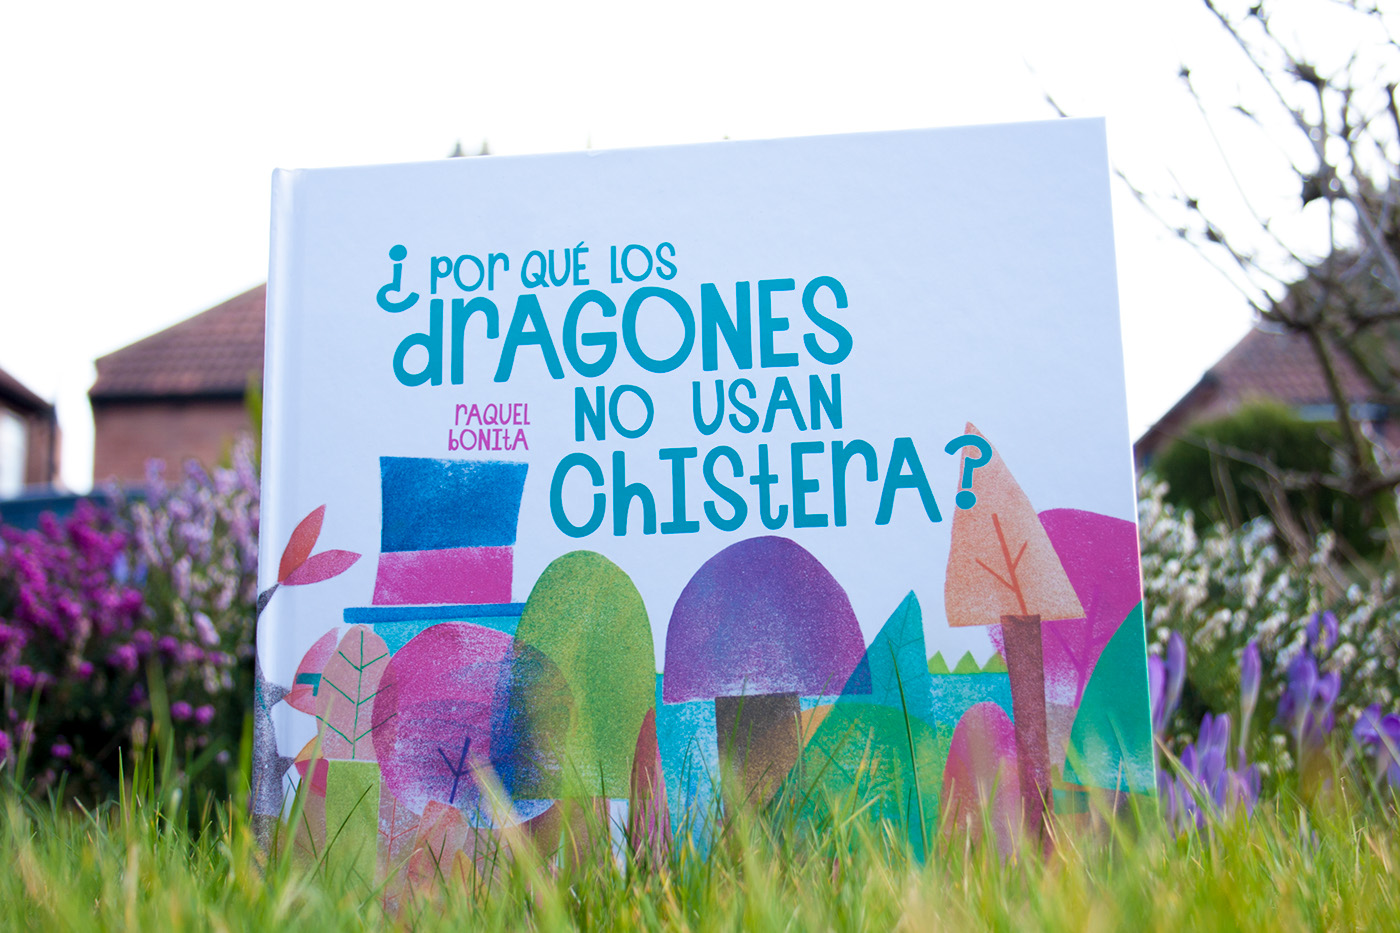 Picture book dragon raquel bonita handprinting children illustration kidliart stamp